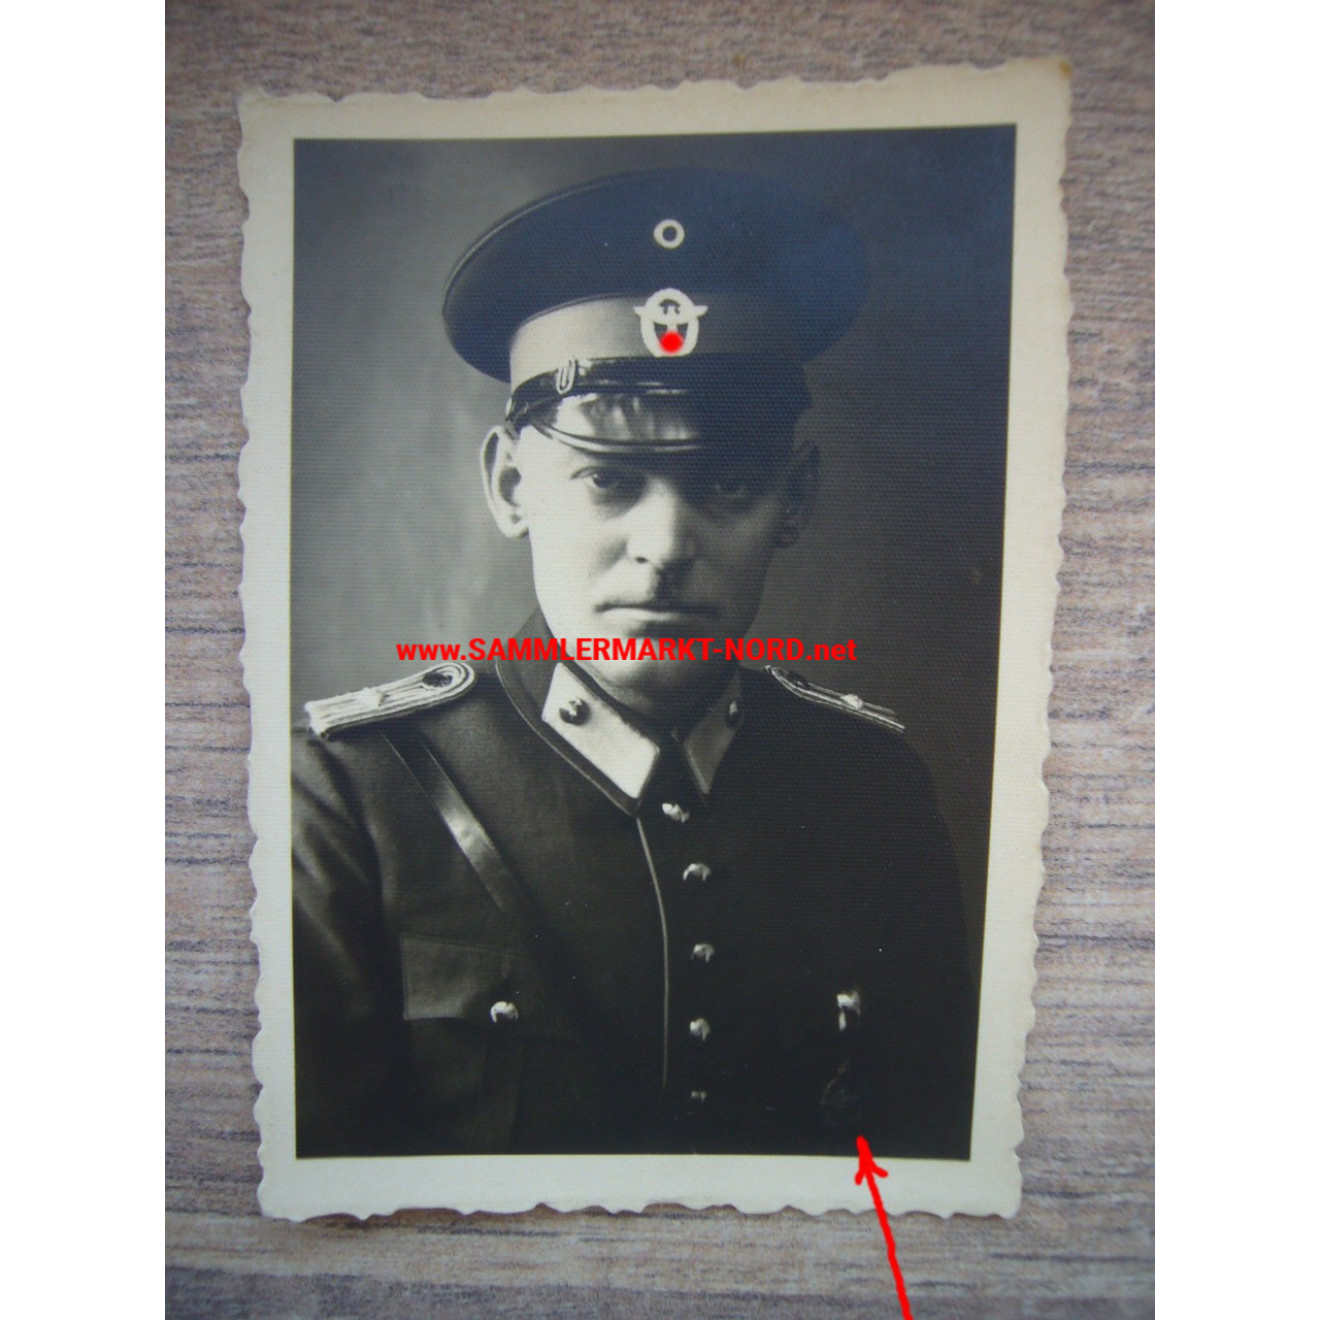 Police station lieutenant with visor cap